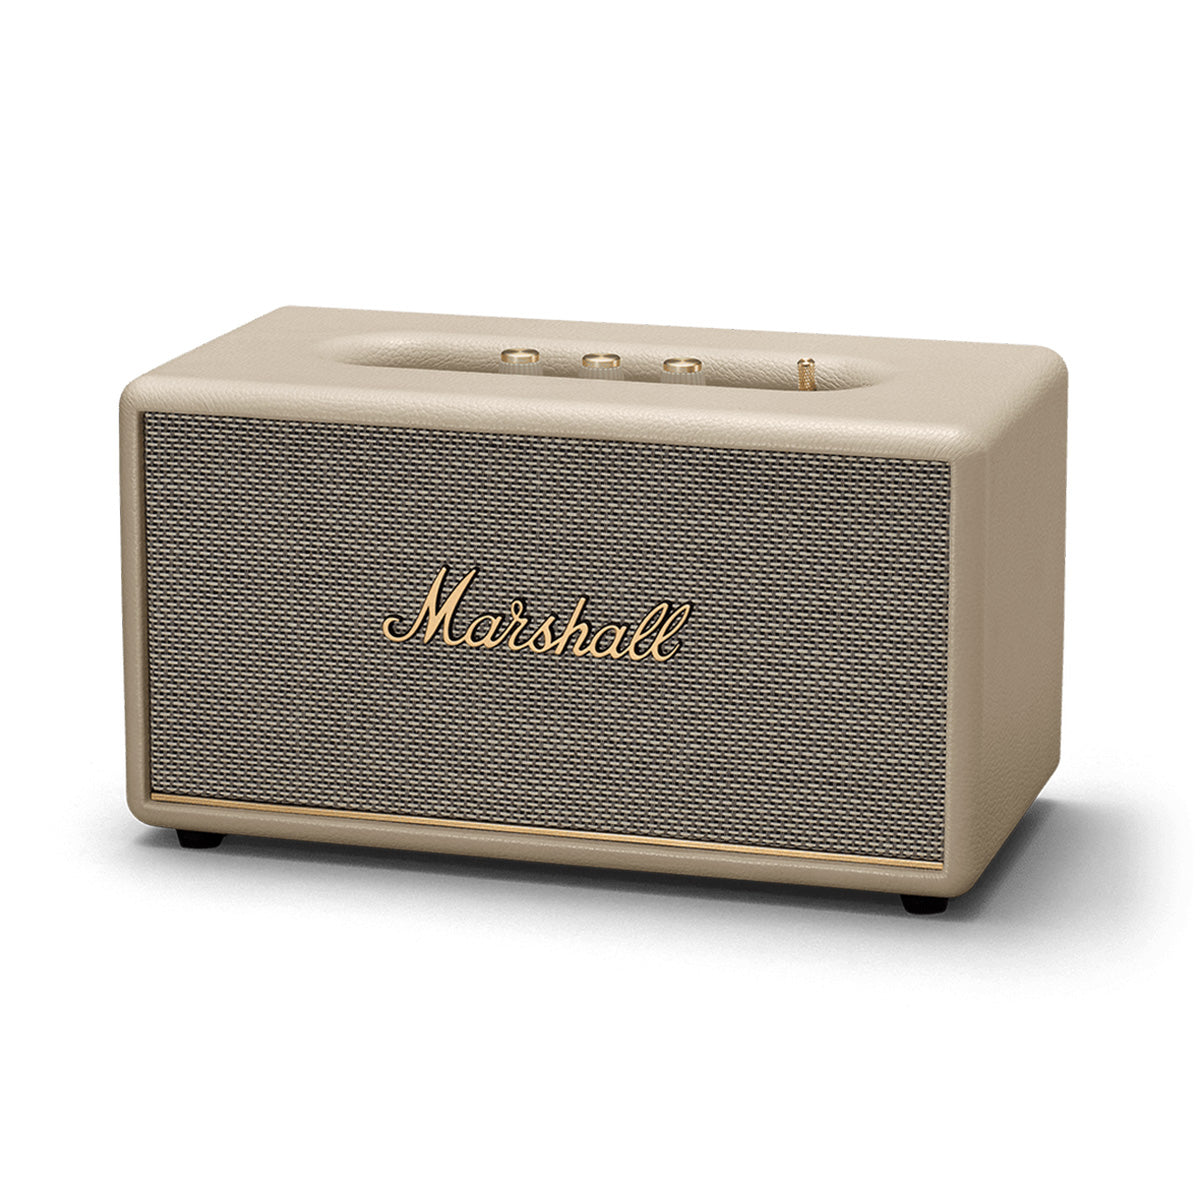 Marshall Stanmore lll Wireless Speaker